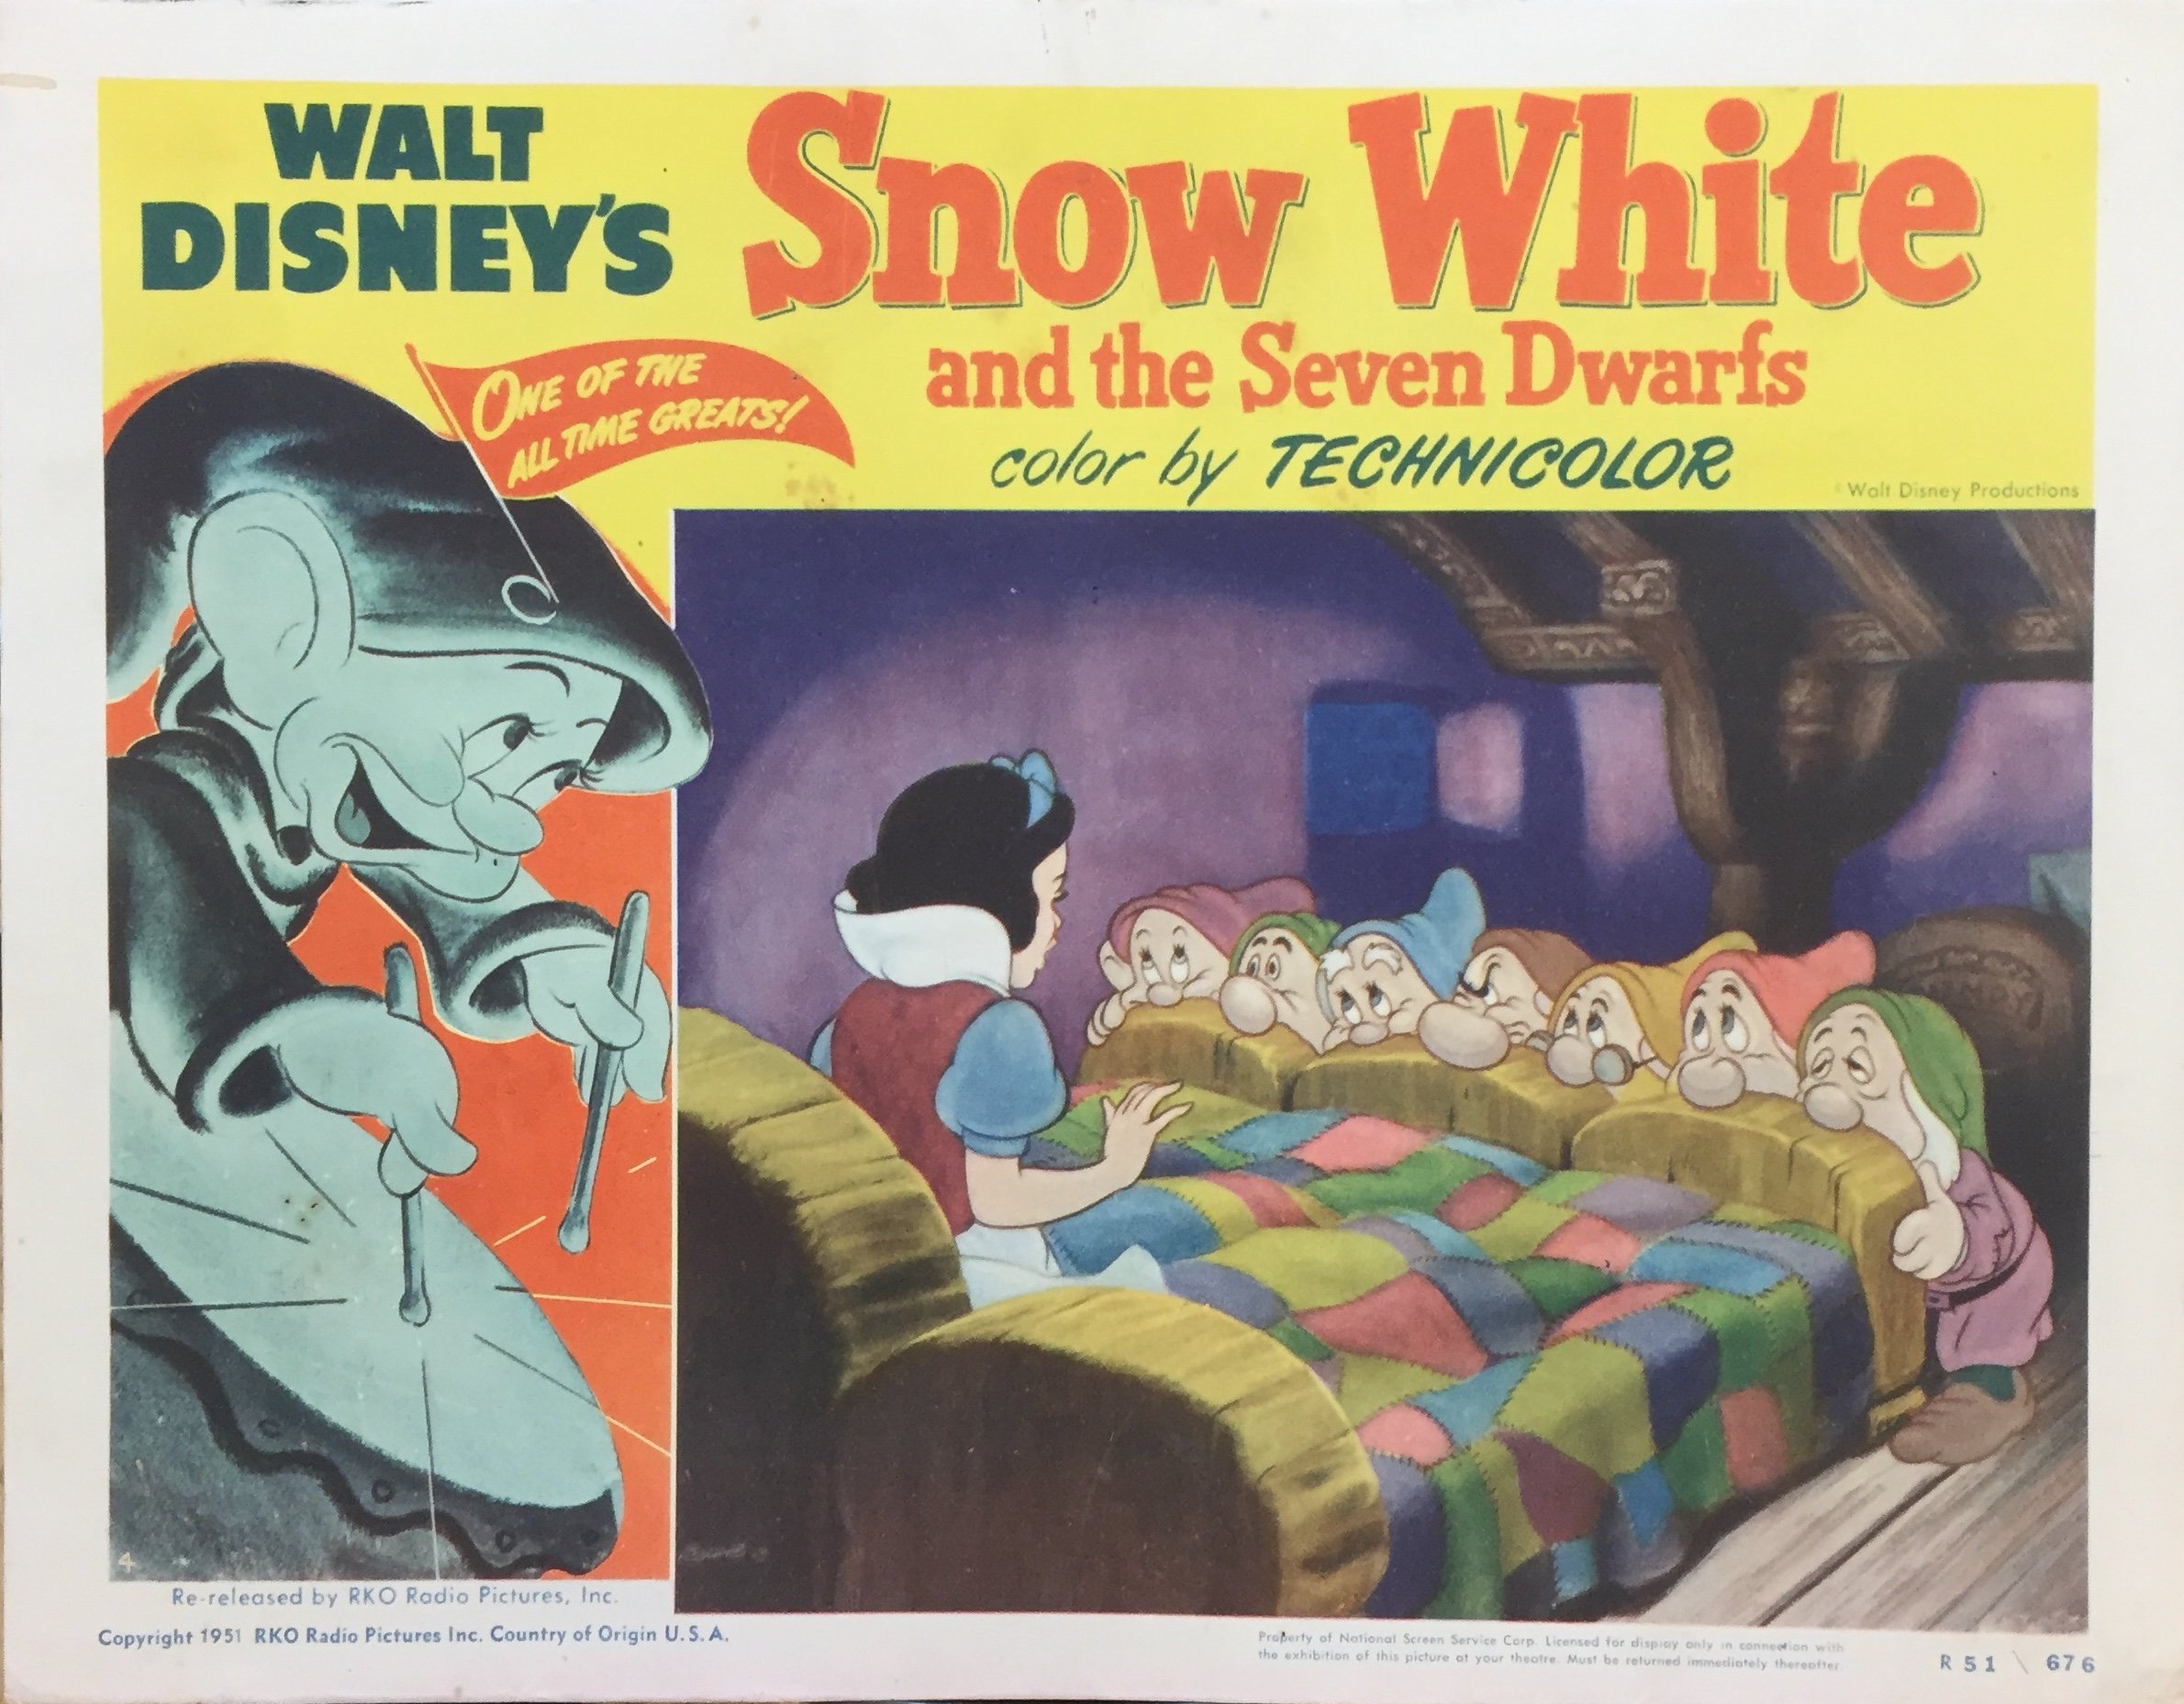 Original vintage US cinema lobby card movie poster for Snow White and the Seven Dwarfs